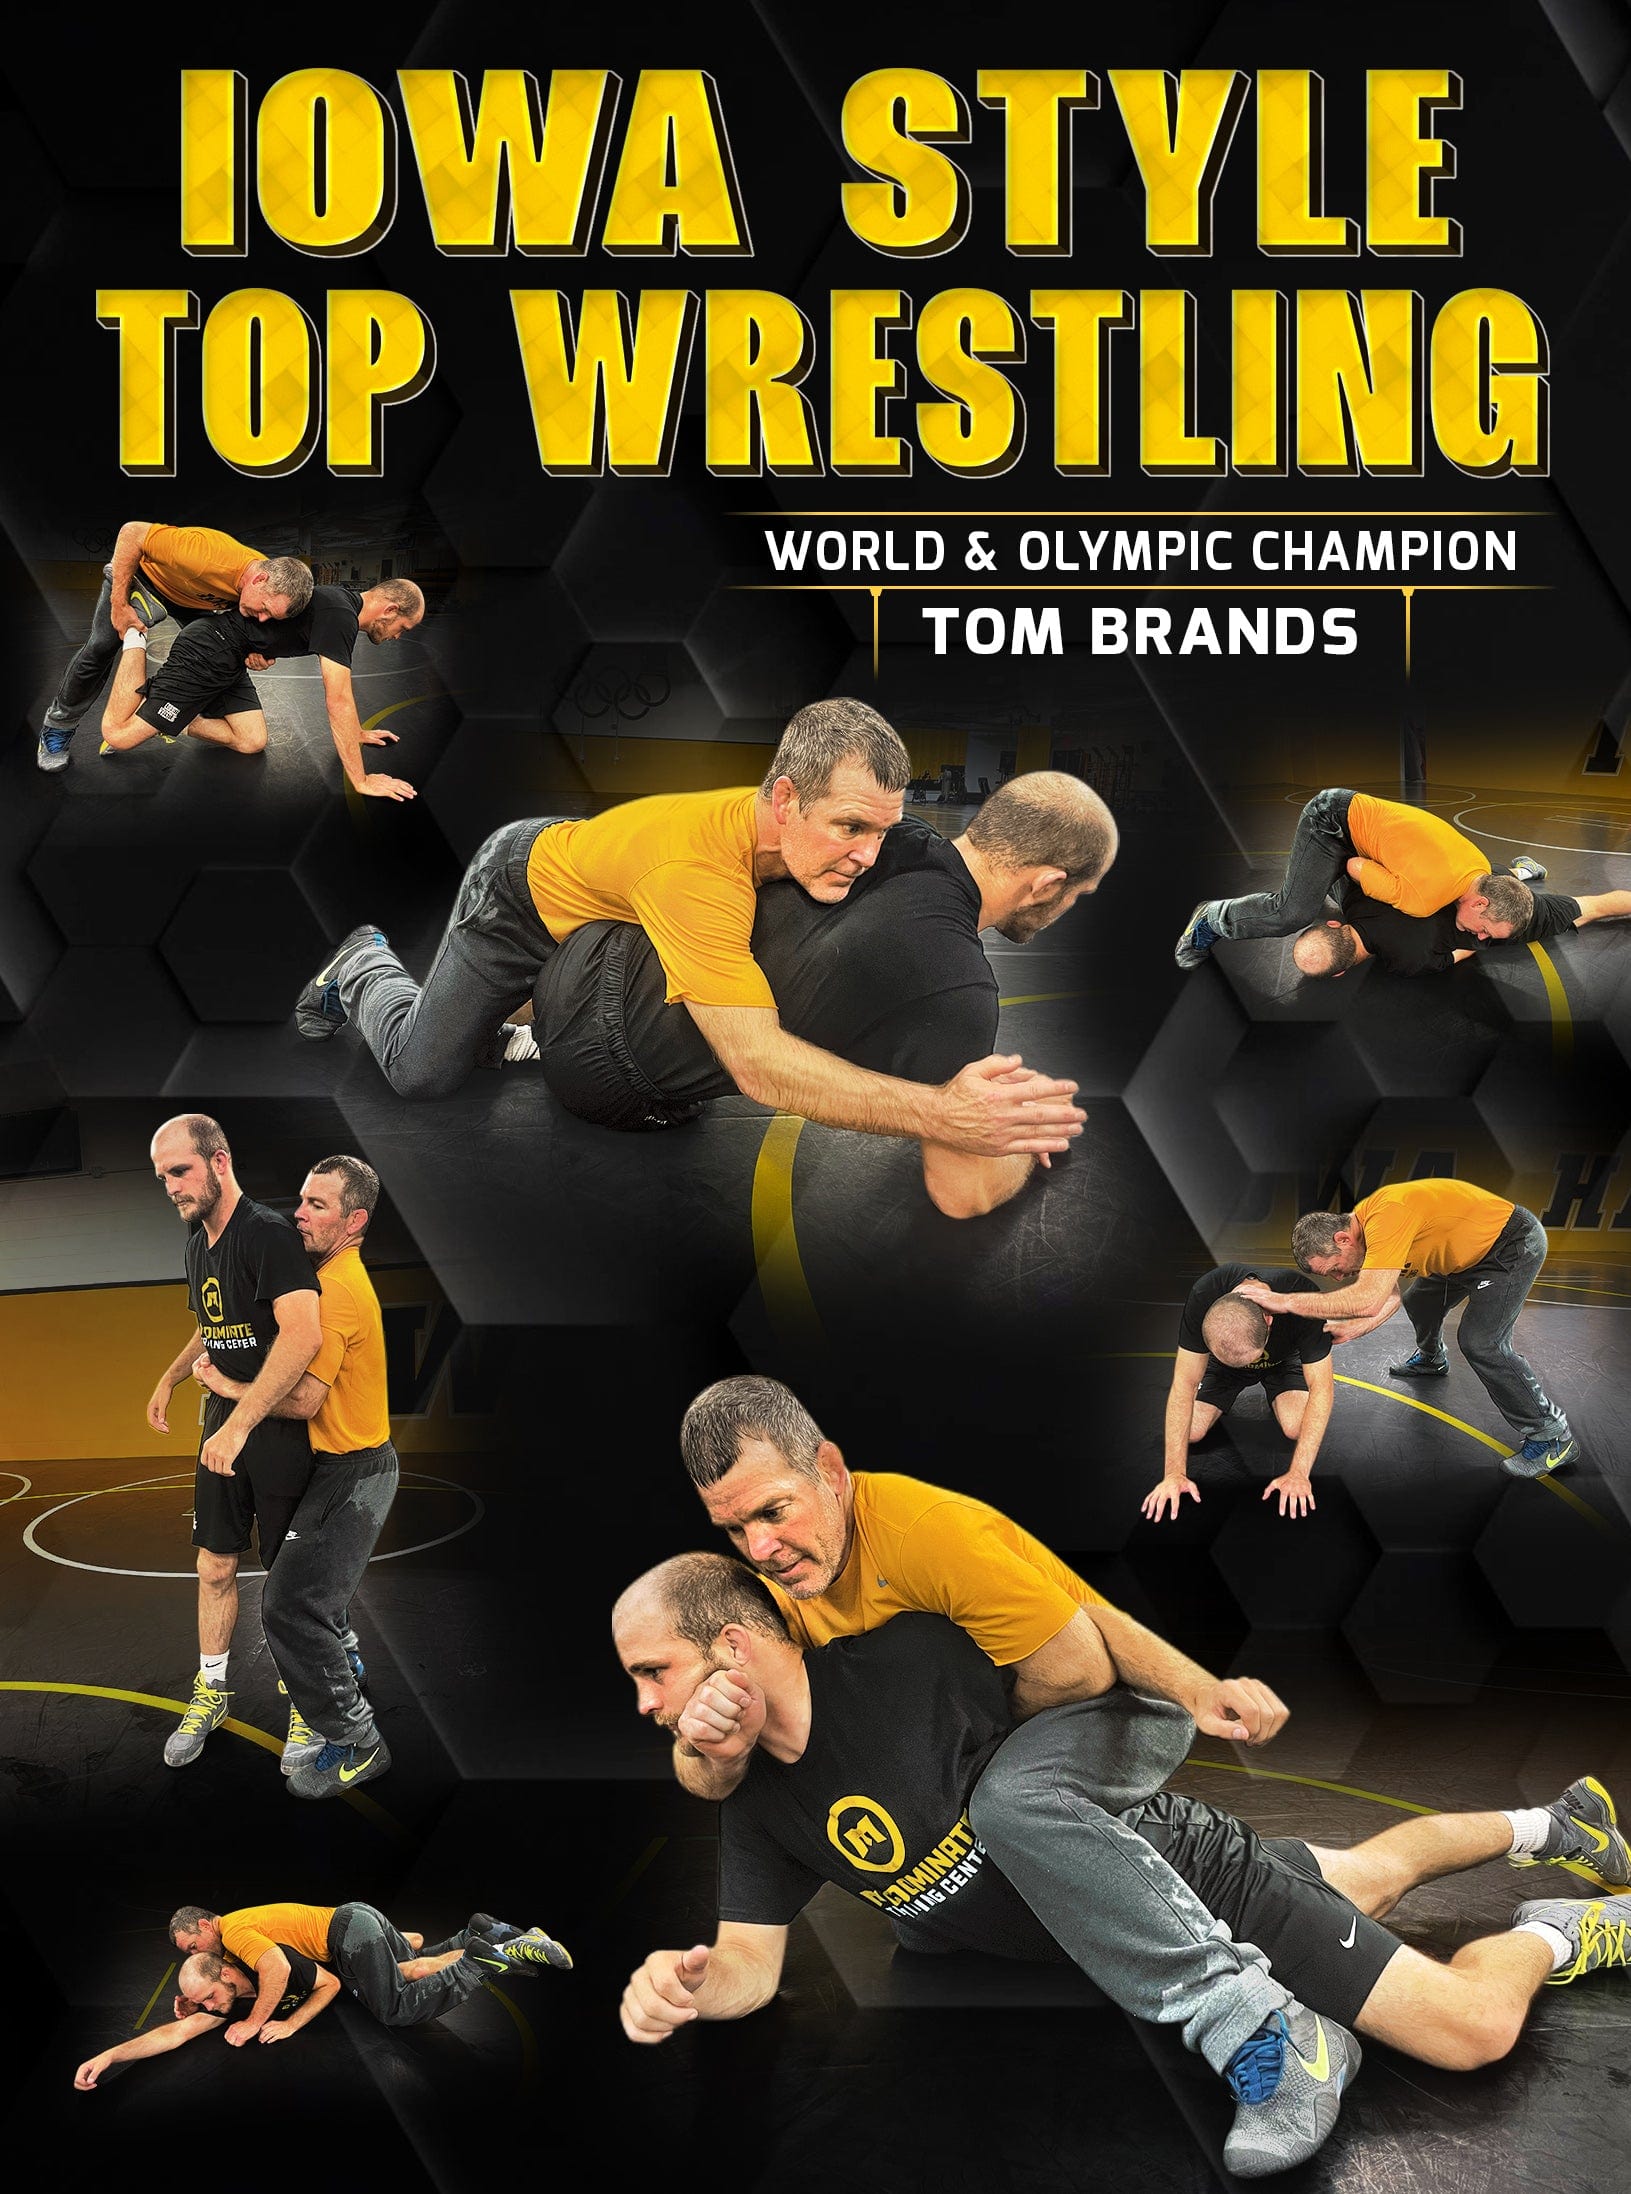 Iowa Style Top Wrestling by Tom Brands - Fanatic Wrestling